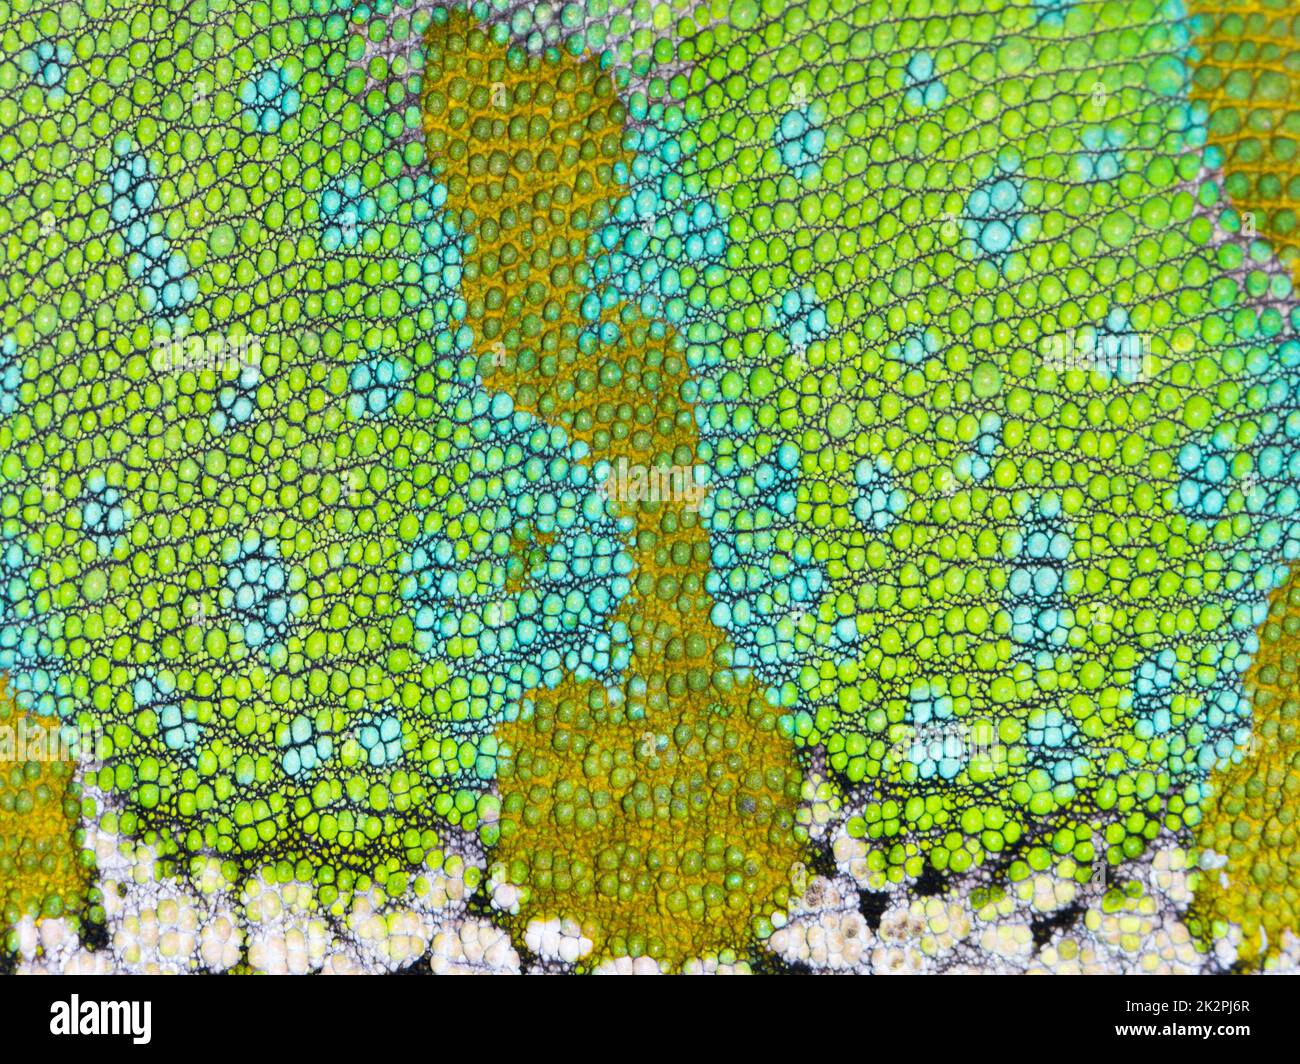 Chameleon skin close-up. Detailed Grid pattern. Stock Photo